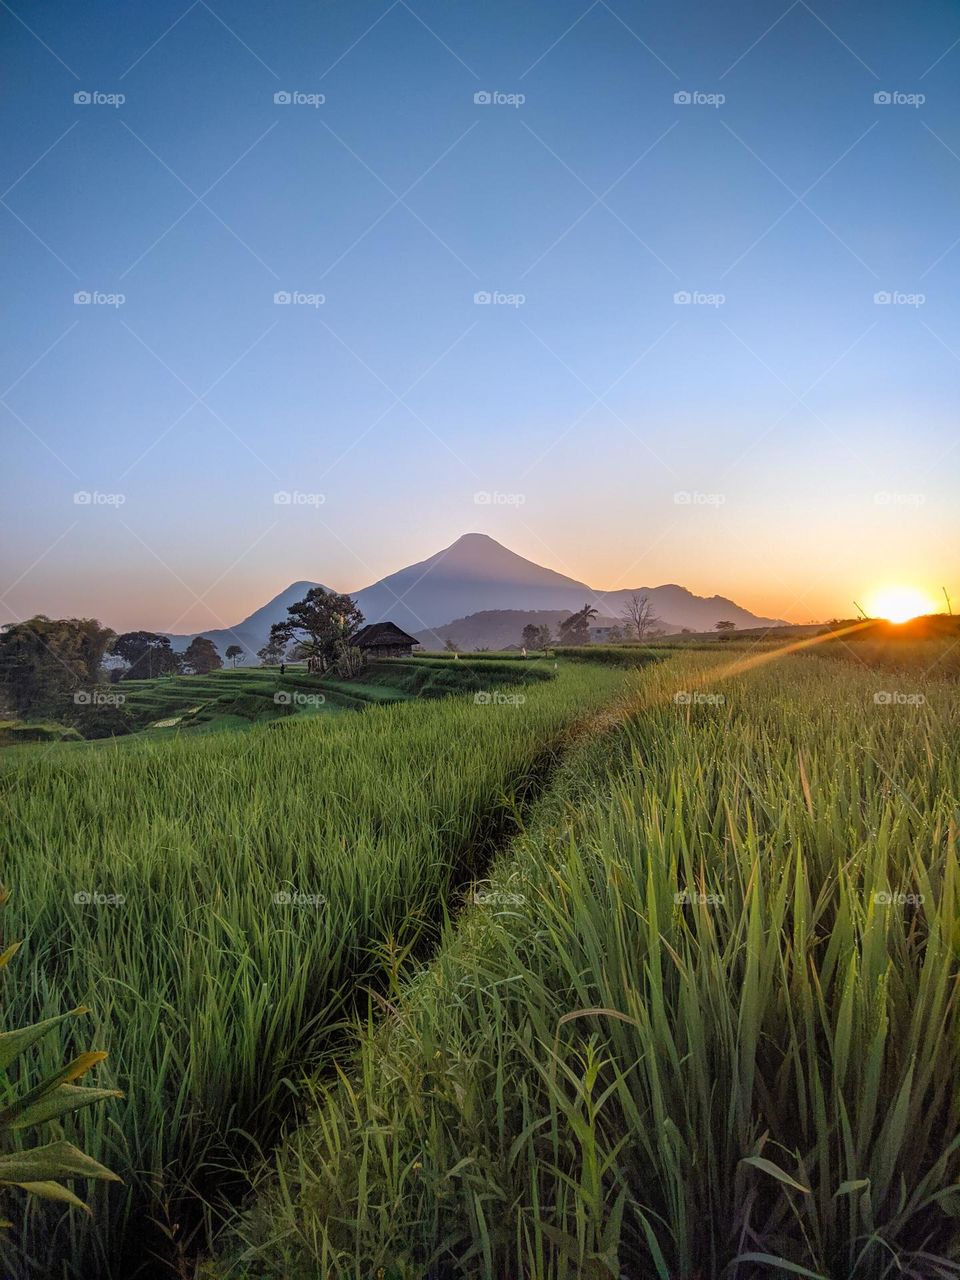 Indonesia has very beautiful rice fields